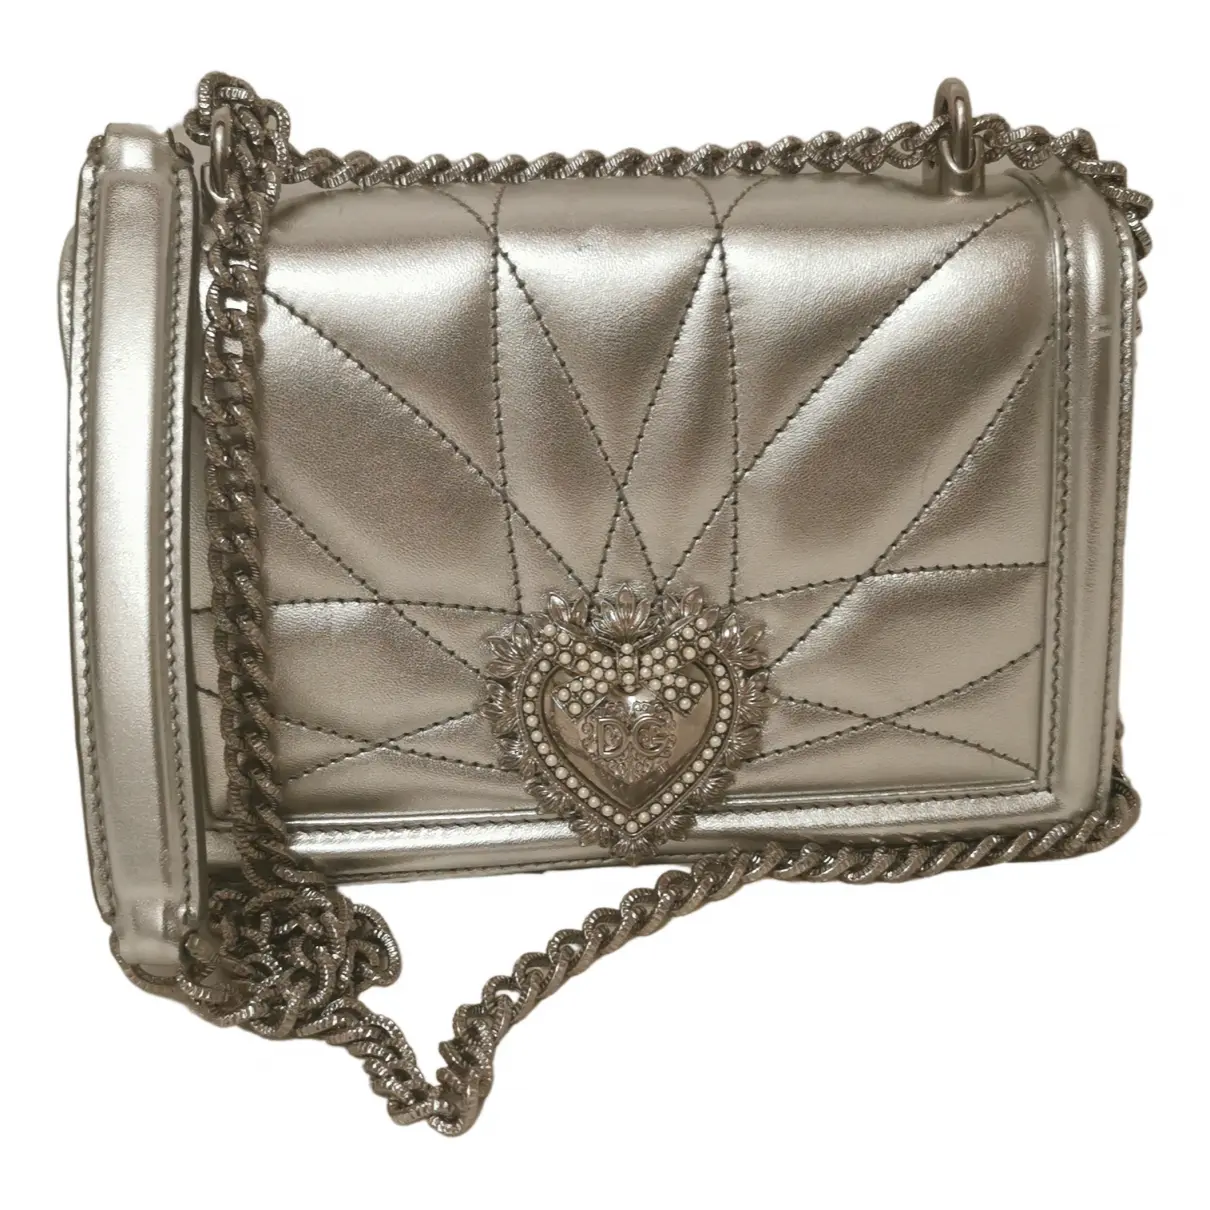 Devotion leather crossbody bag Dolce & Gabbana